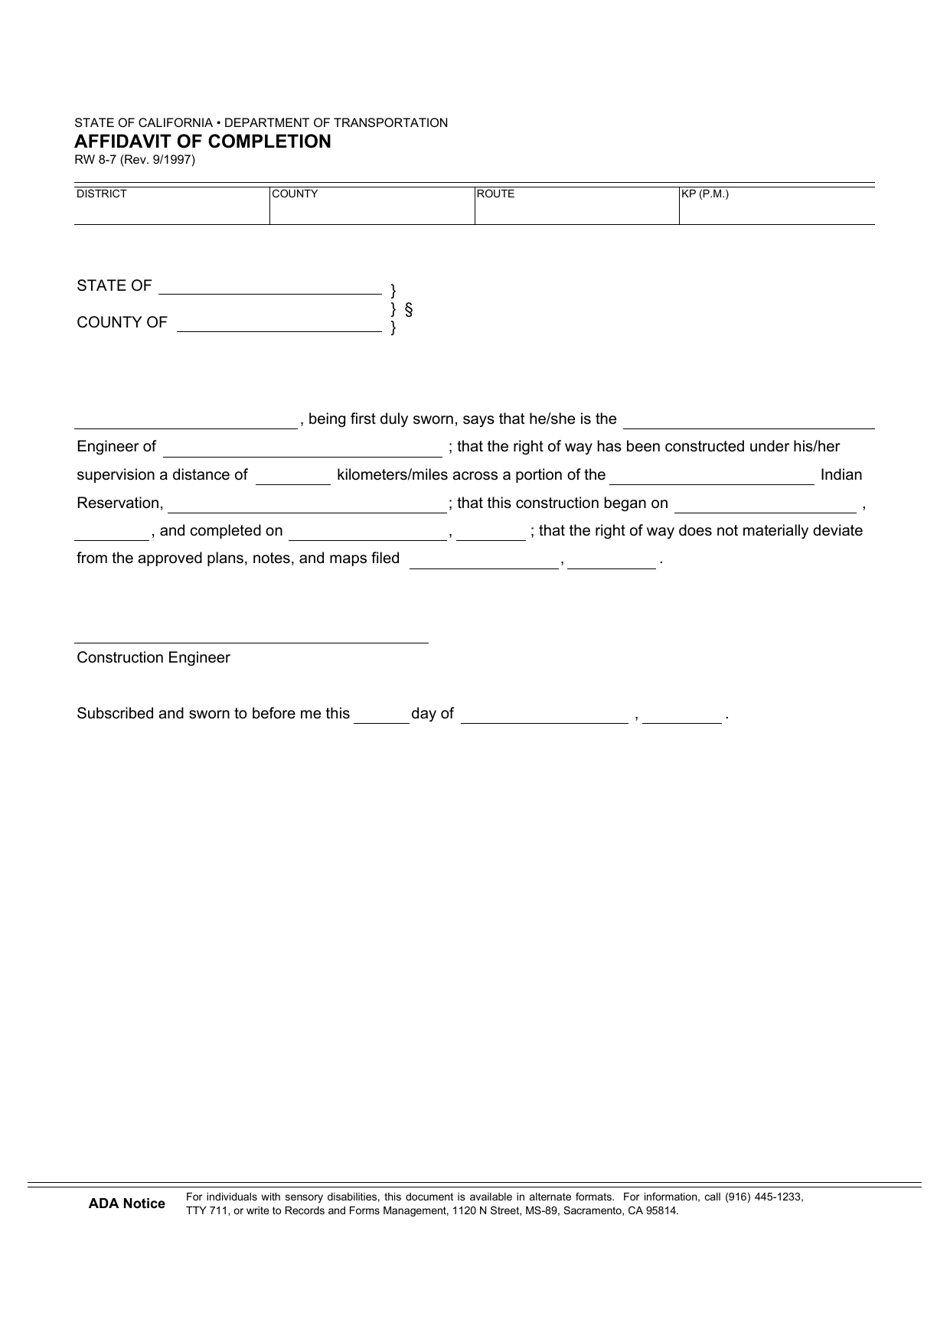 Form RW8-7 Affidavit of Completion - California, Page 1